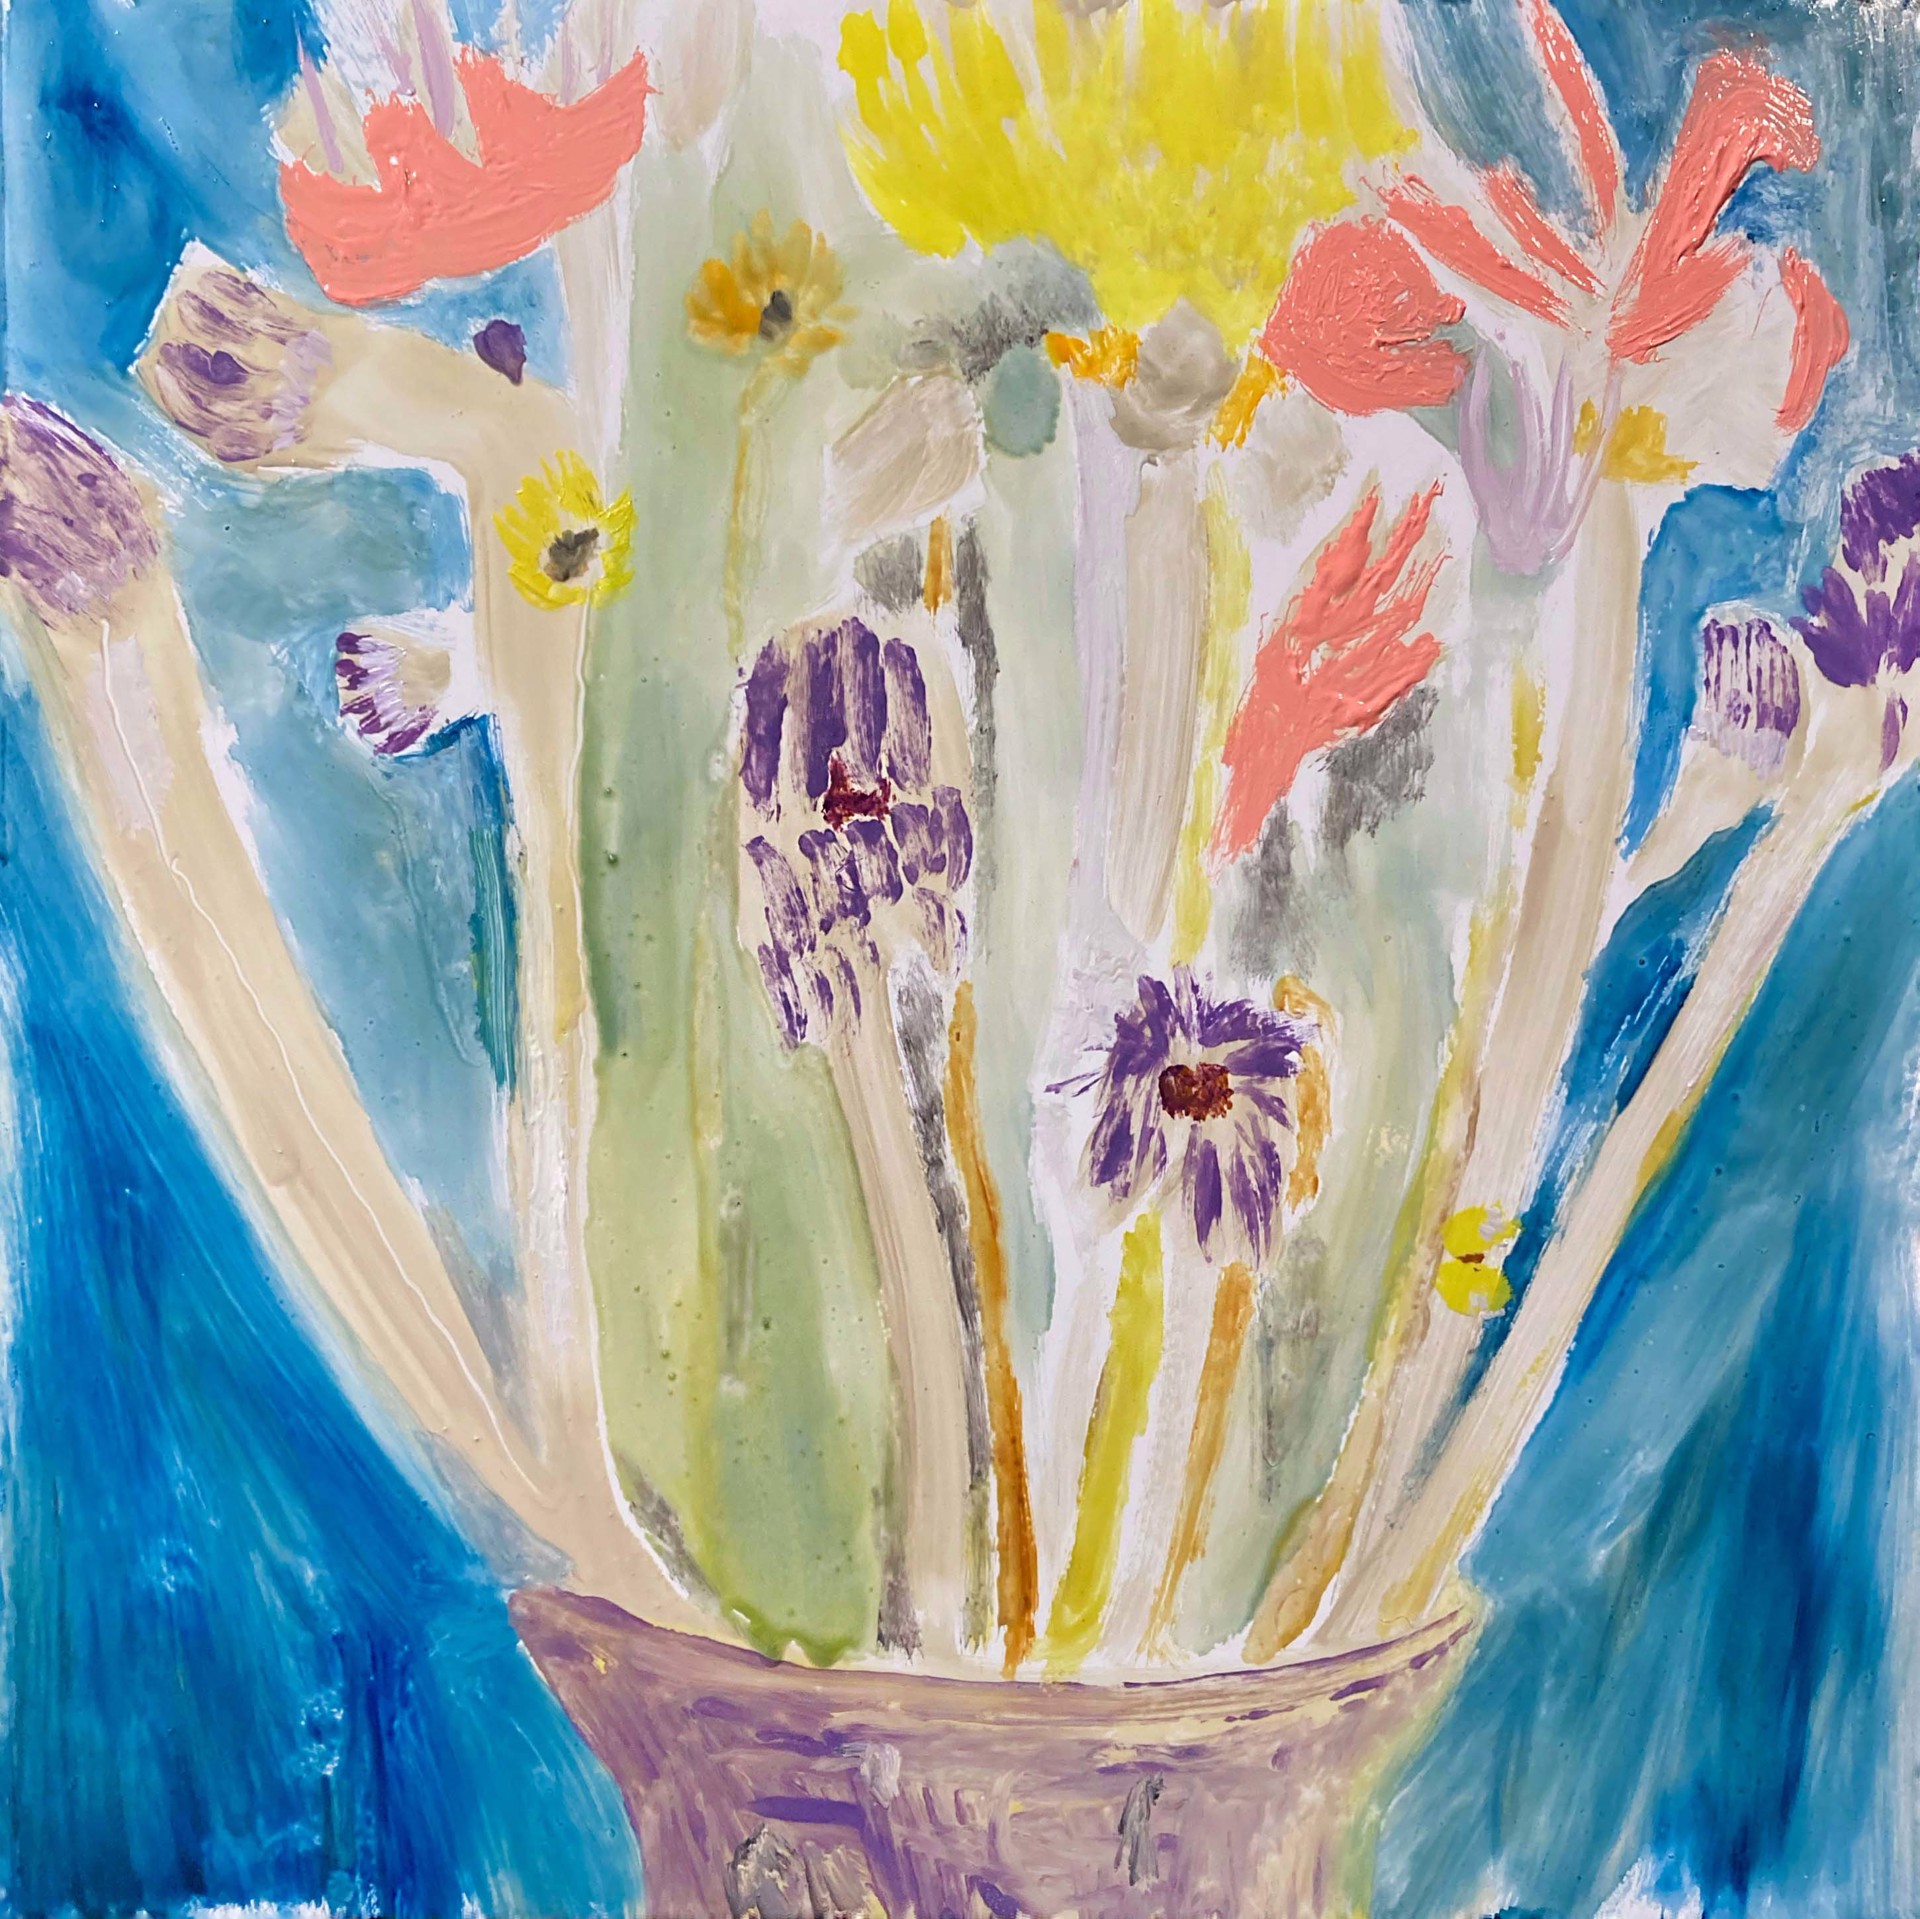 Finding Flowers by John Paul Kesling